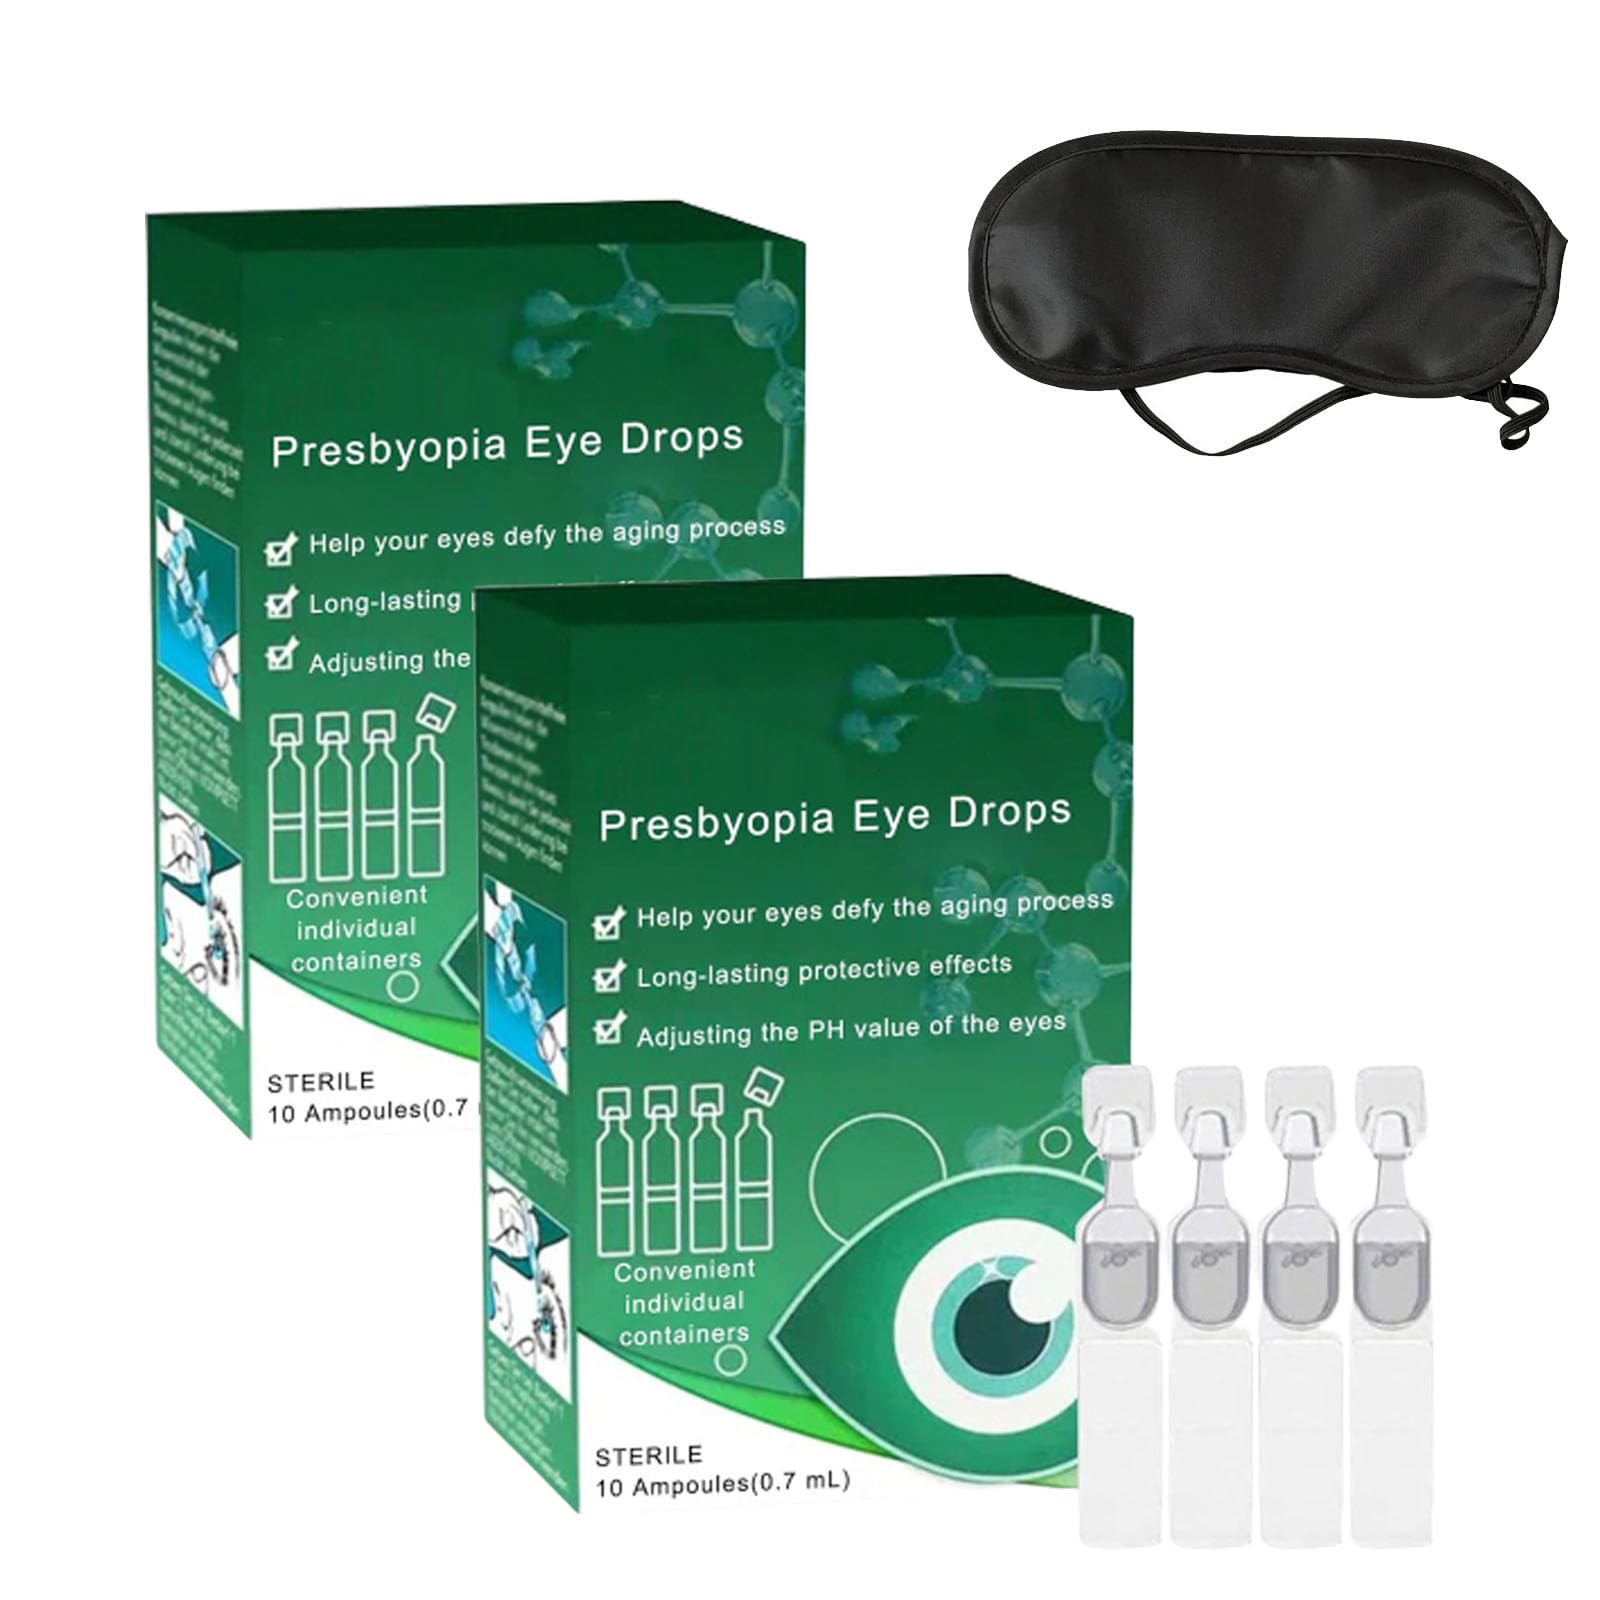 Oveallgo Promax Presbyopia Visionrestore Augentropfen, Oveallgo Presbyopia Augentropfen, Attdx Augentropfen, Oveallgo Treatment Augentropfen, Replenish Eye Nutrition, Visionrestore (2box)